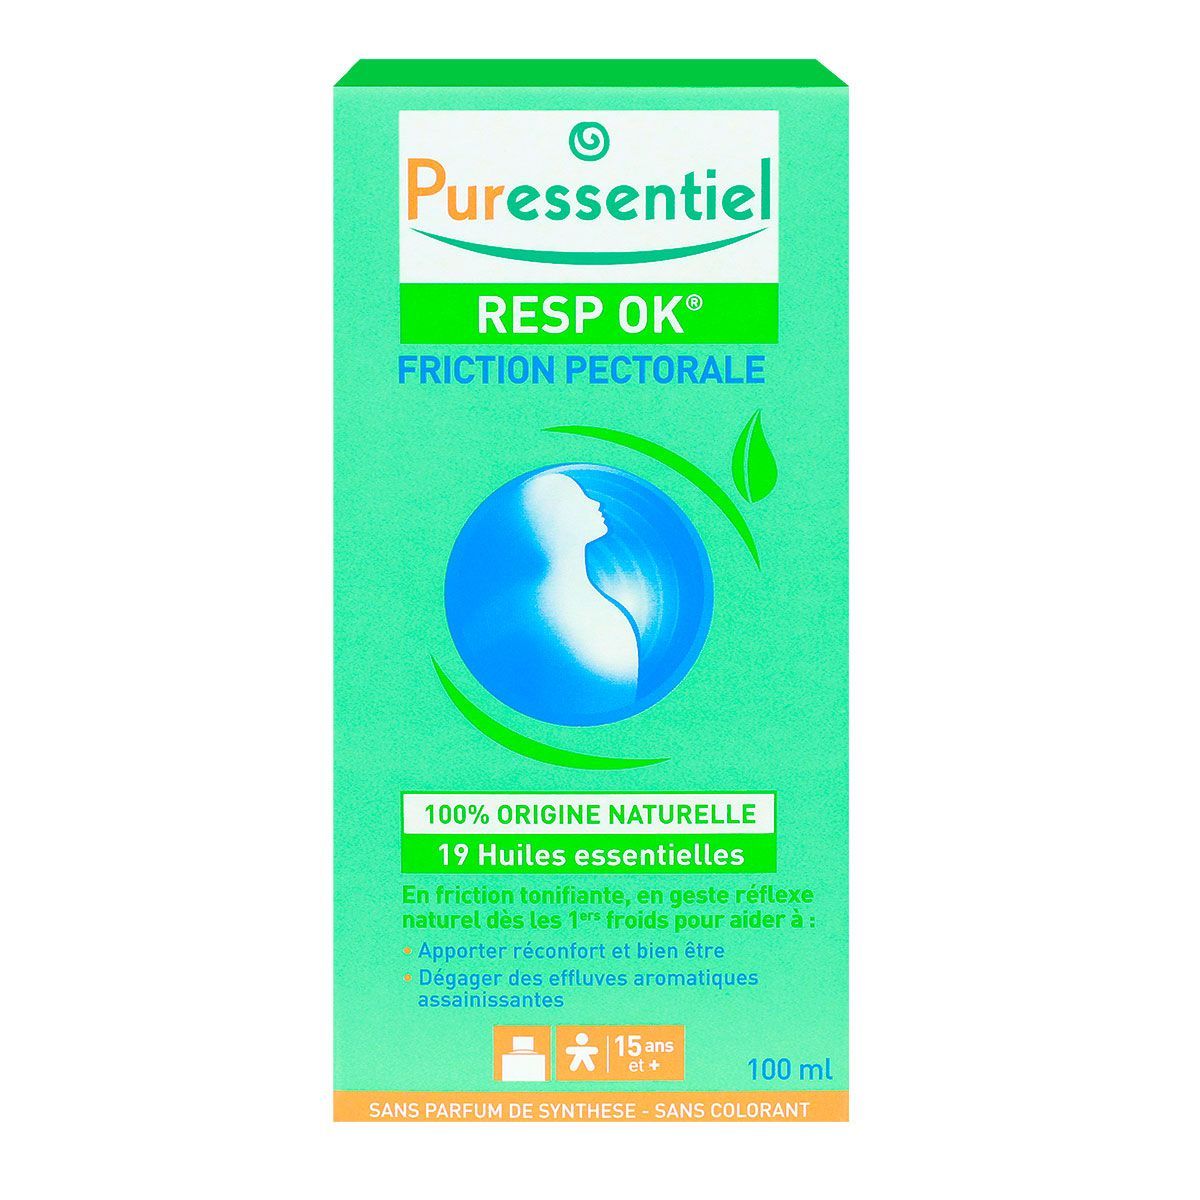 Puressentiel - Resp OK Pectoral Friction 100ml